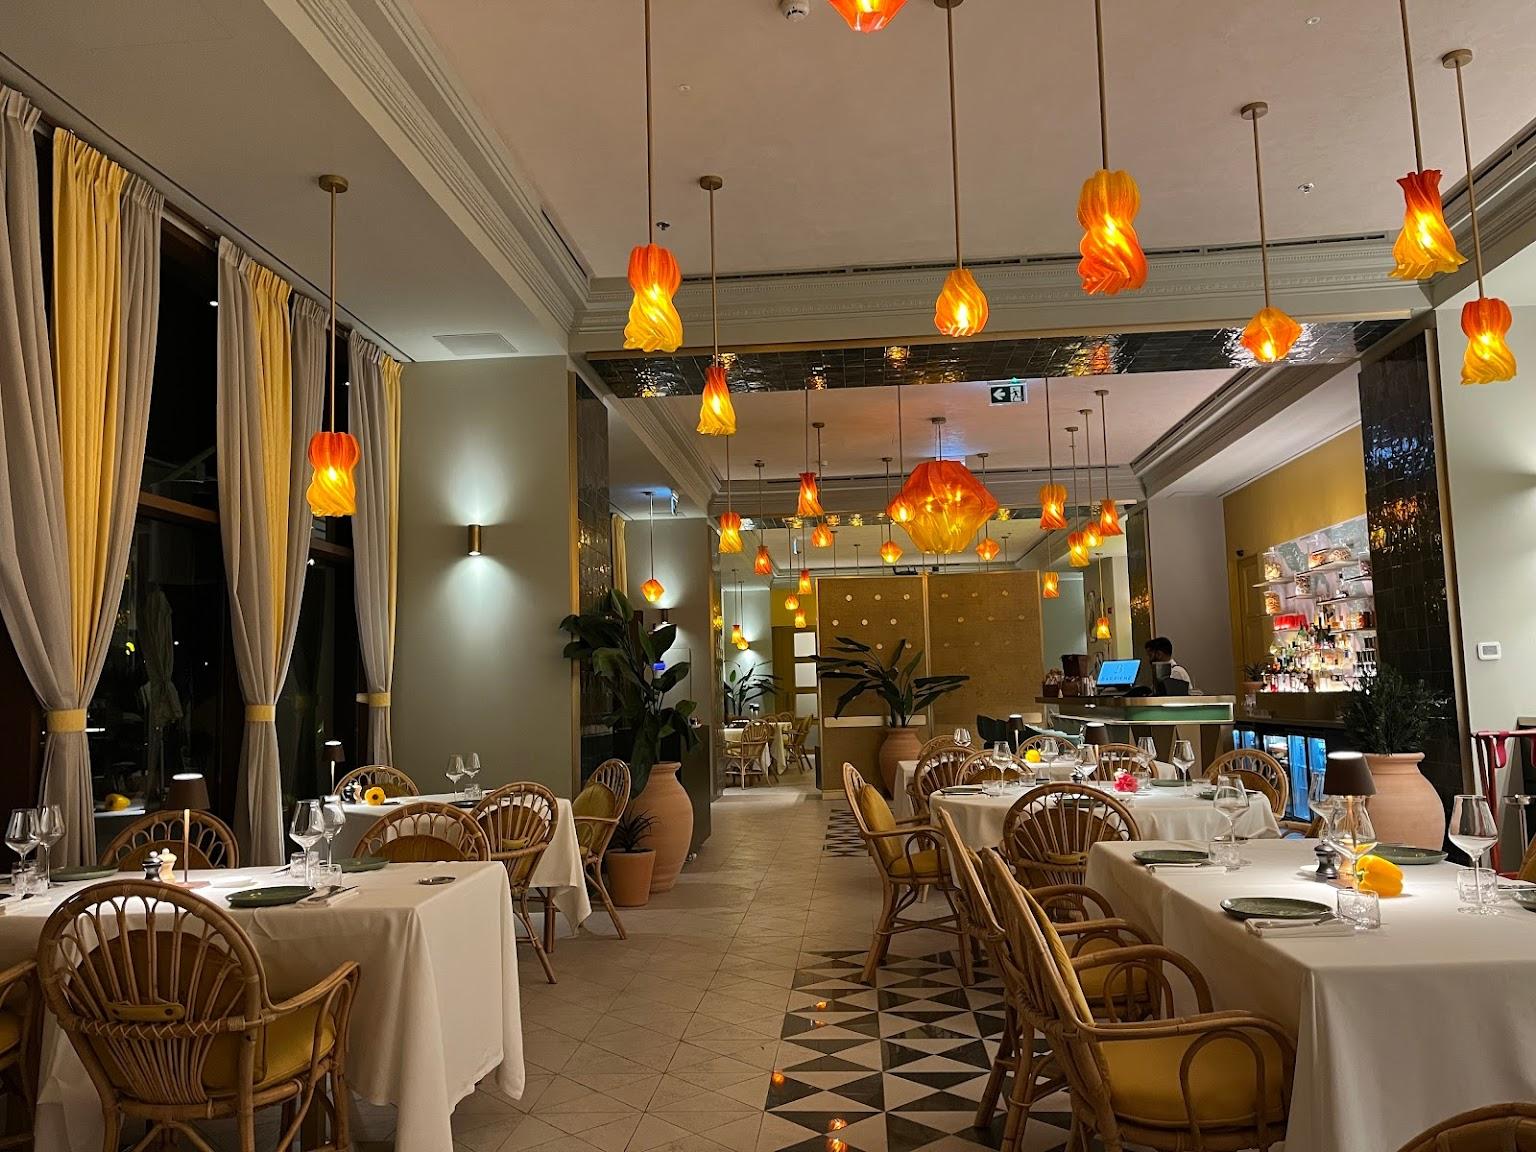 Paradiso – Restaurant in Abu Dhabi, reviews and menu – Nicelocal